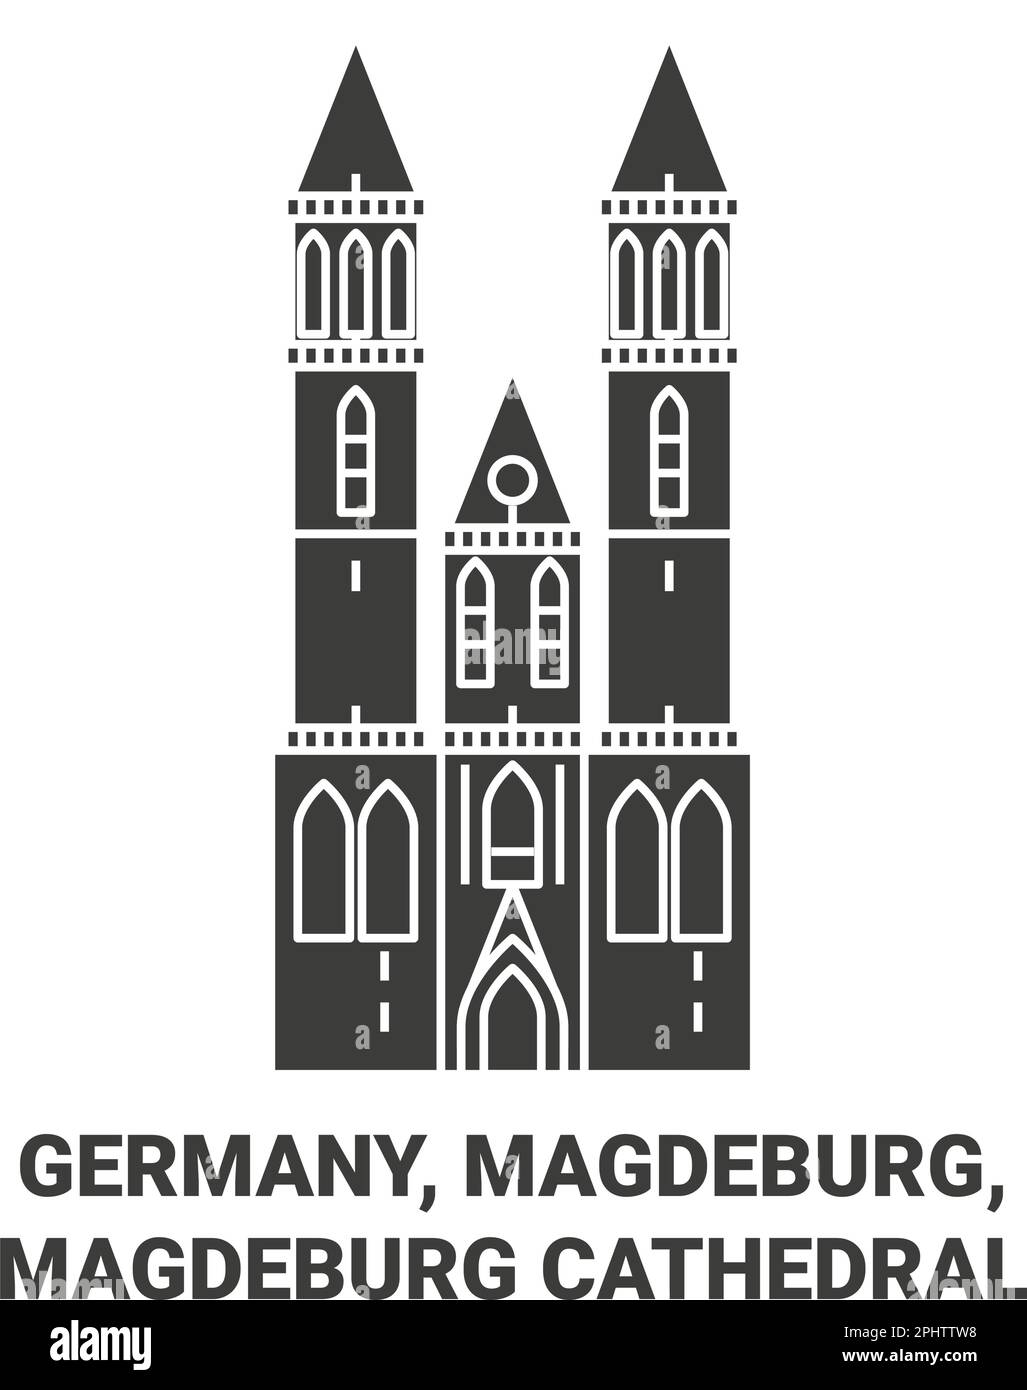 Germany, Magdeburg, Magdeburg Cathedral travel landmark vector illustration Stock Vector